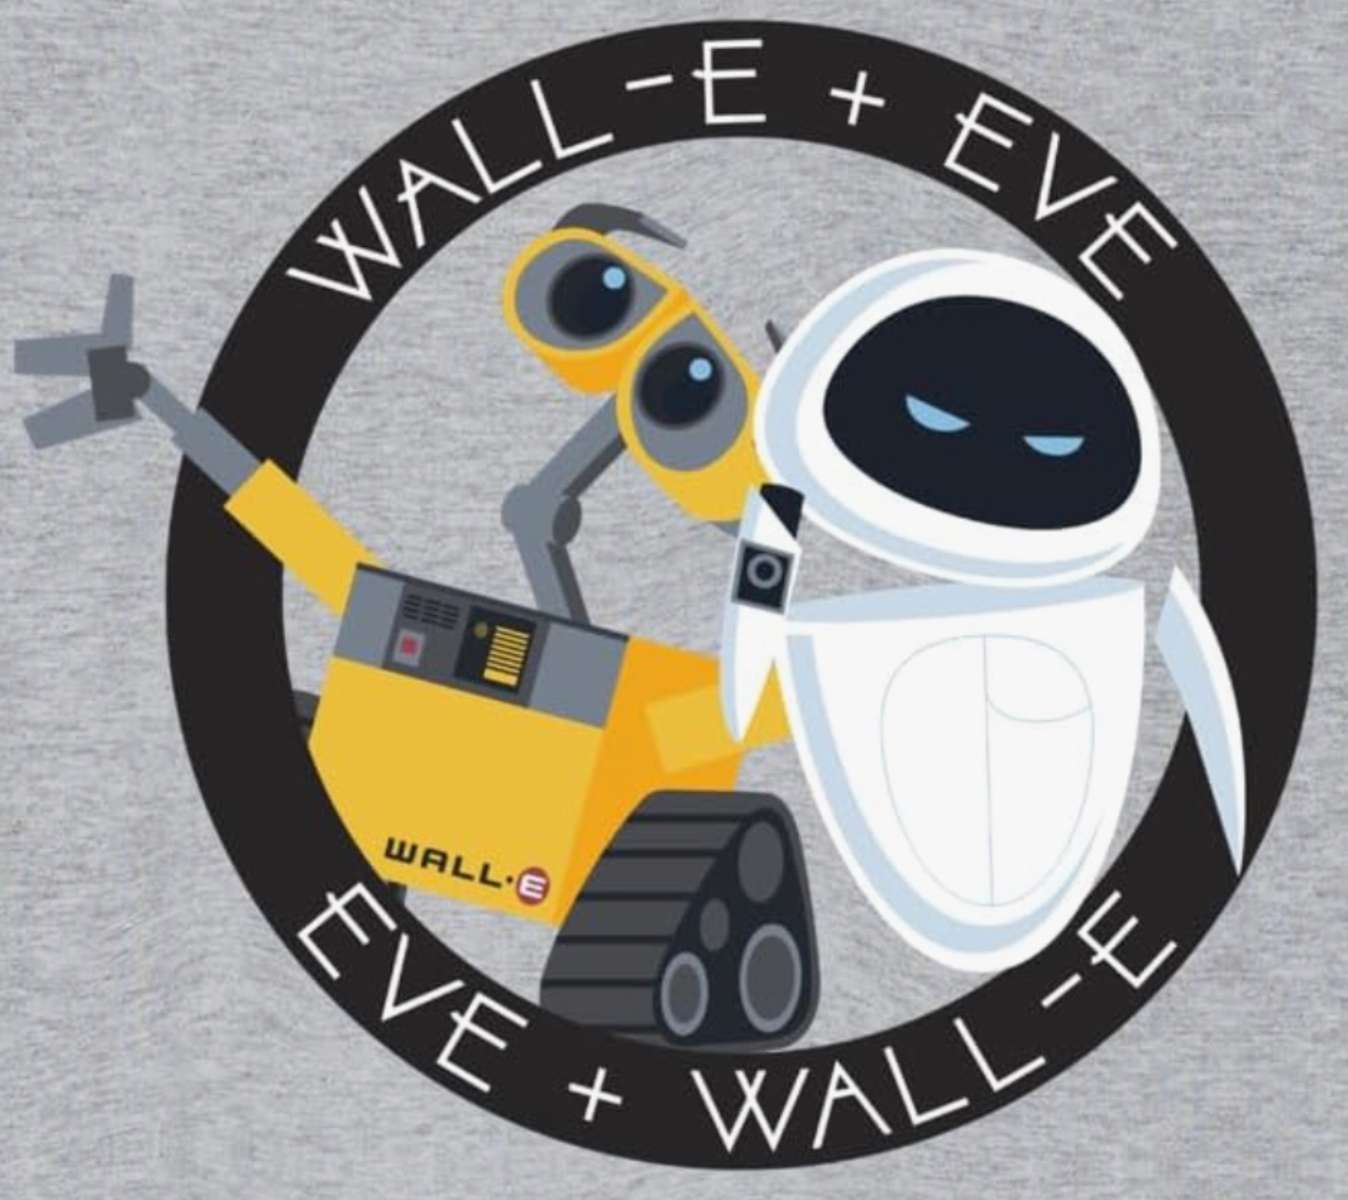 WALL-E + EVE Schattig cirkelportret online puzzel